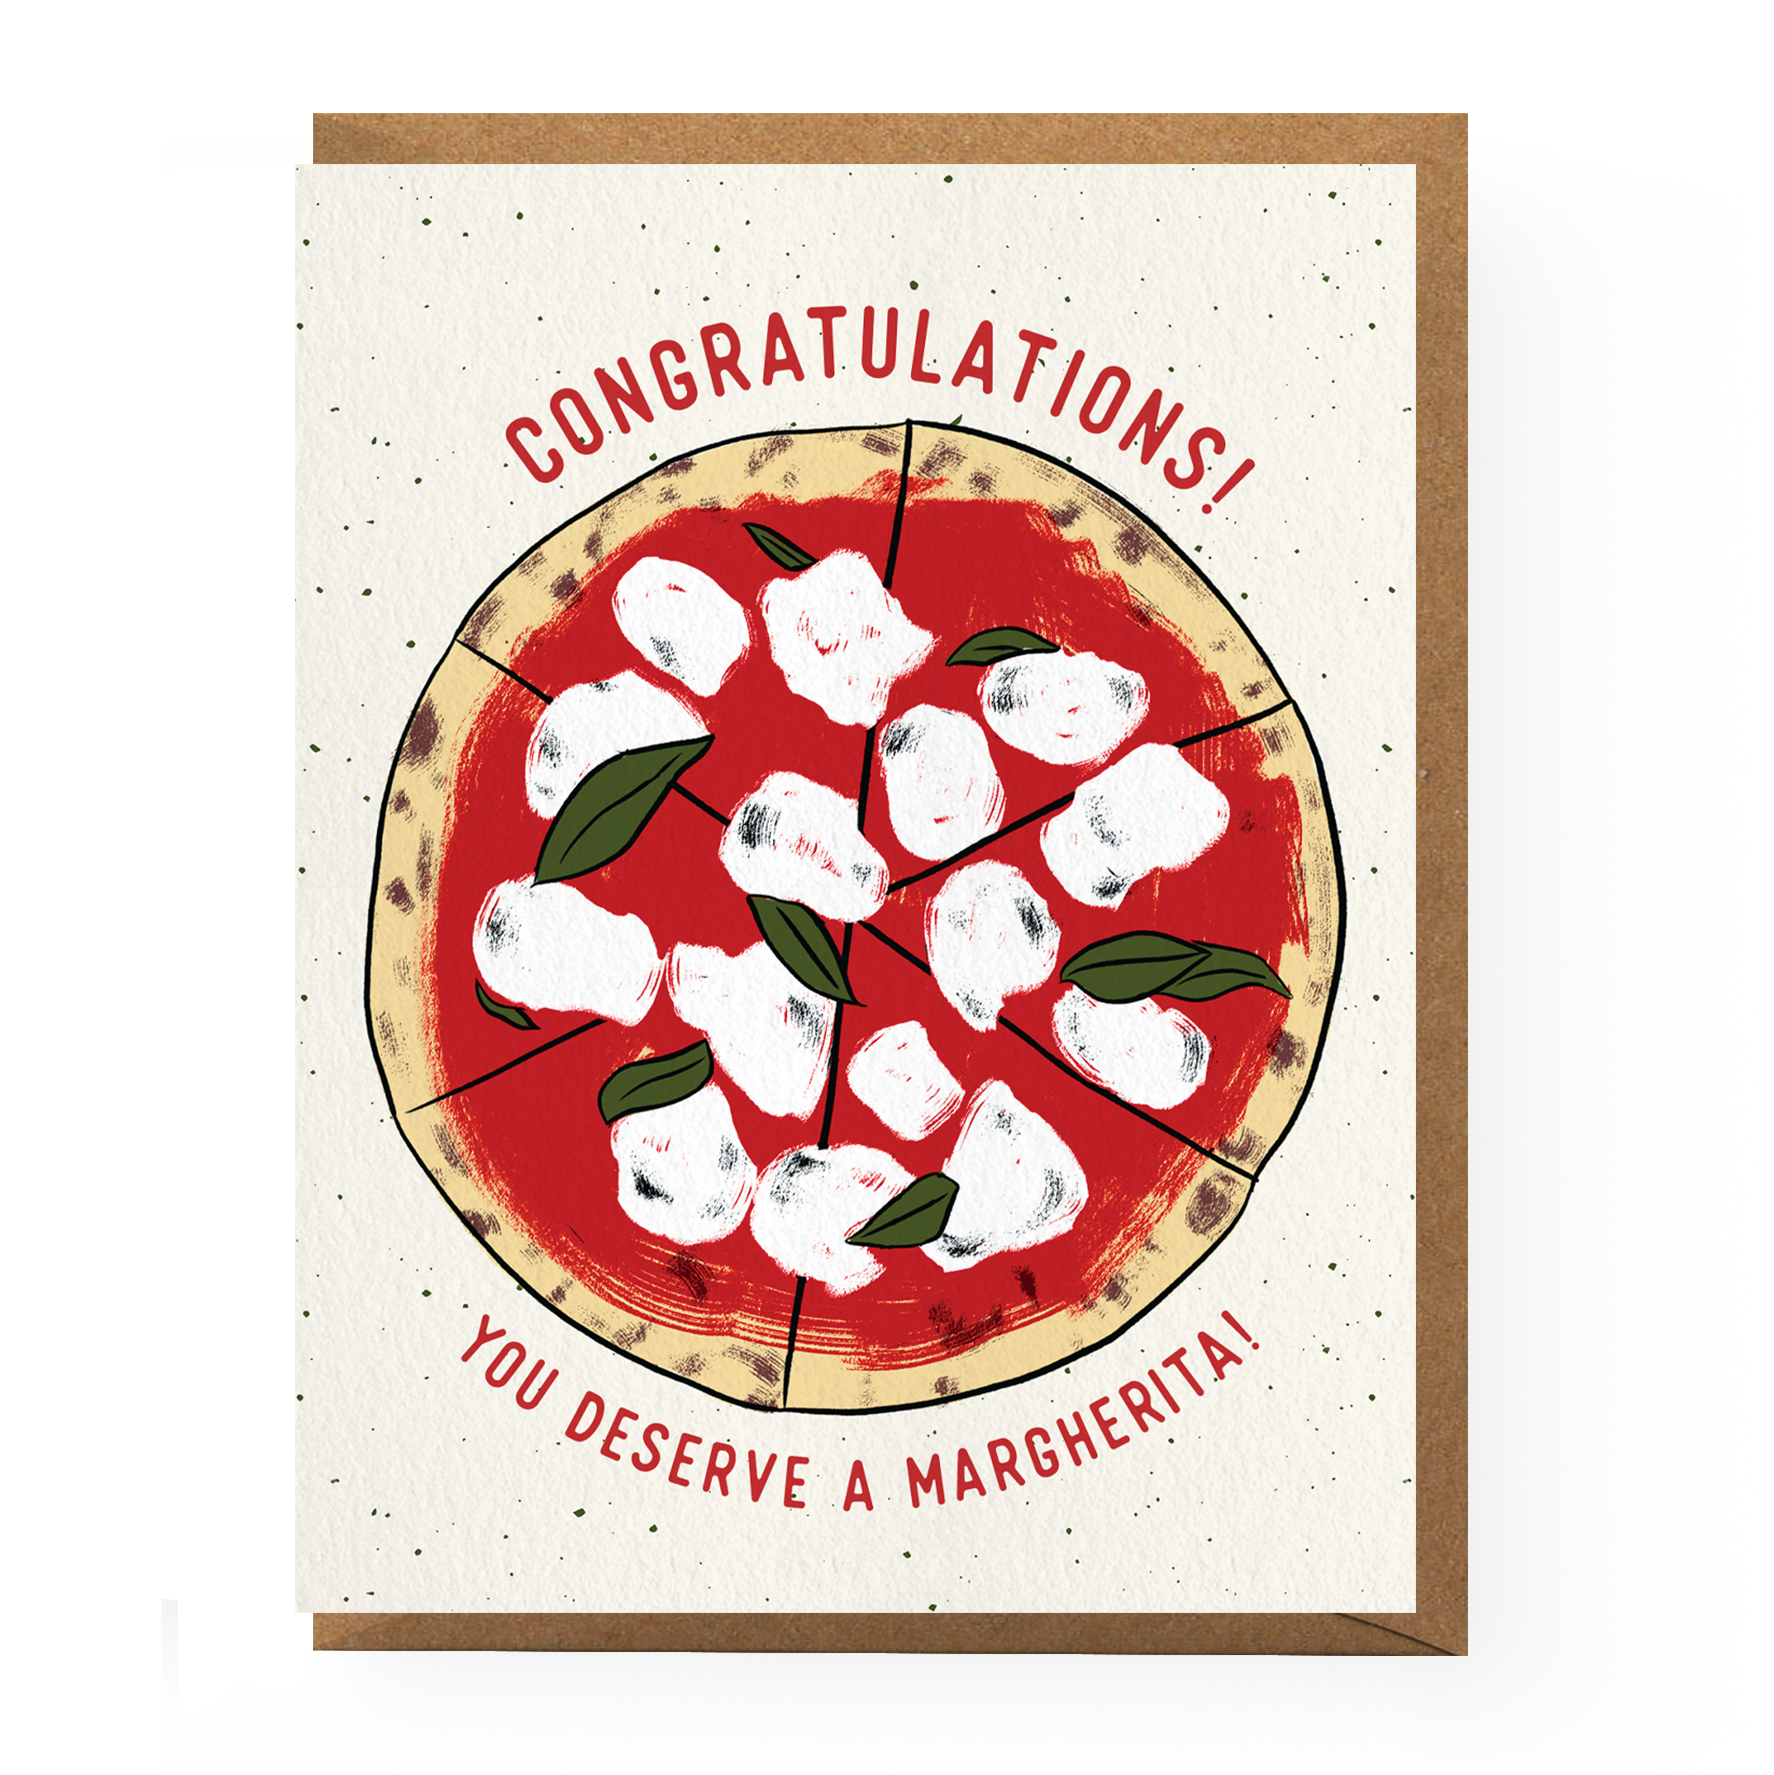 Margherita Pizza Congratulations Card